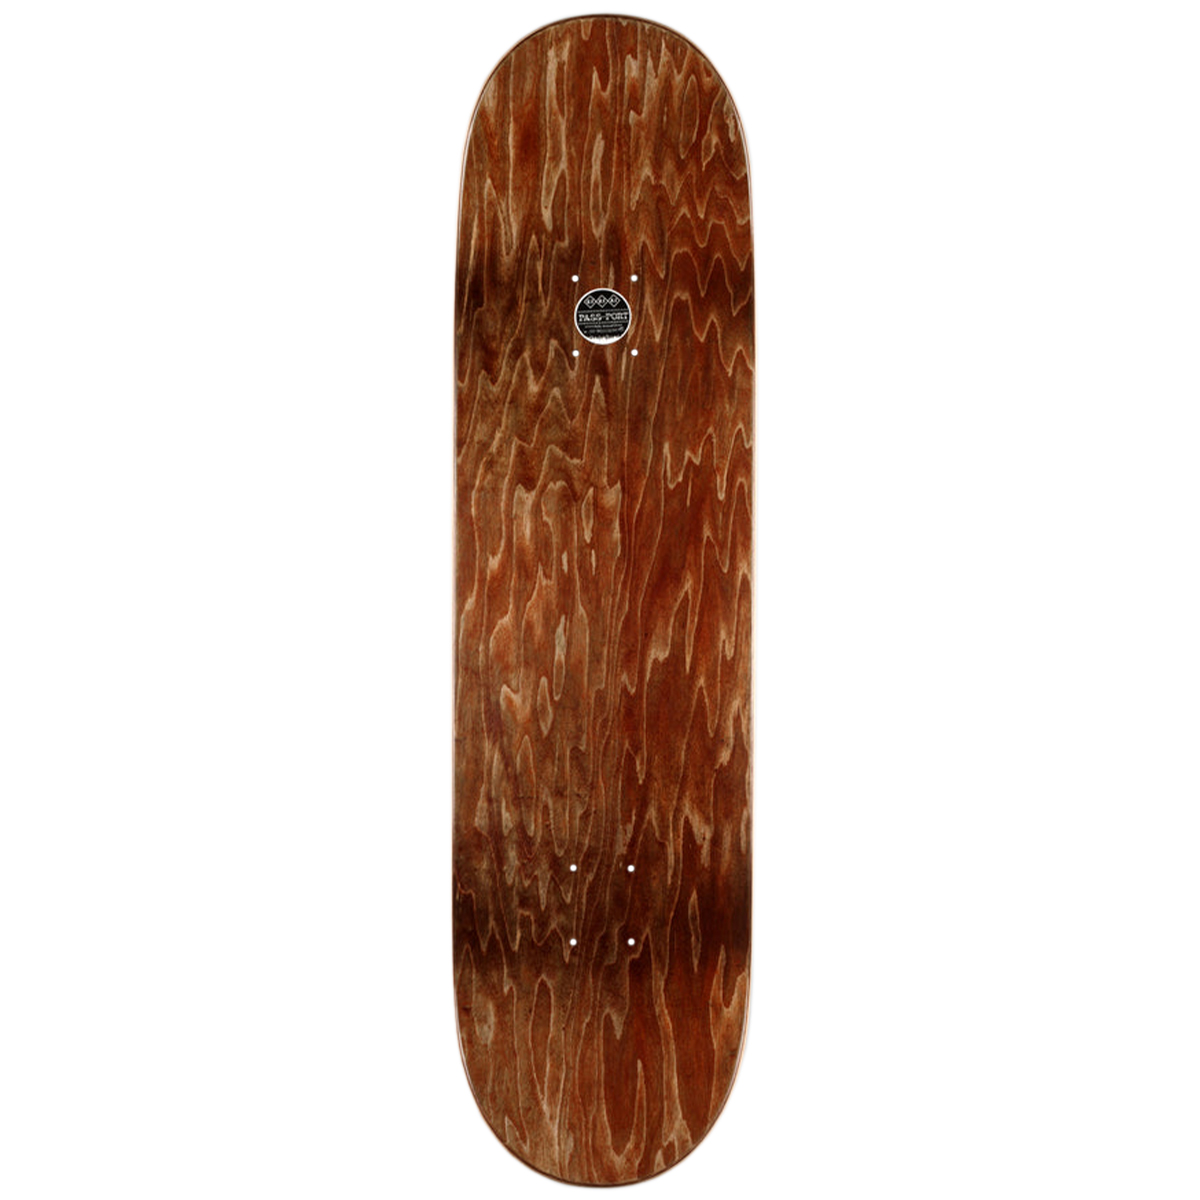 Pass Port Skateboard Deck Hallmark Series Chalice 8.375"